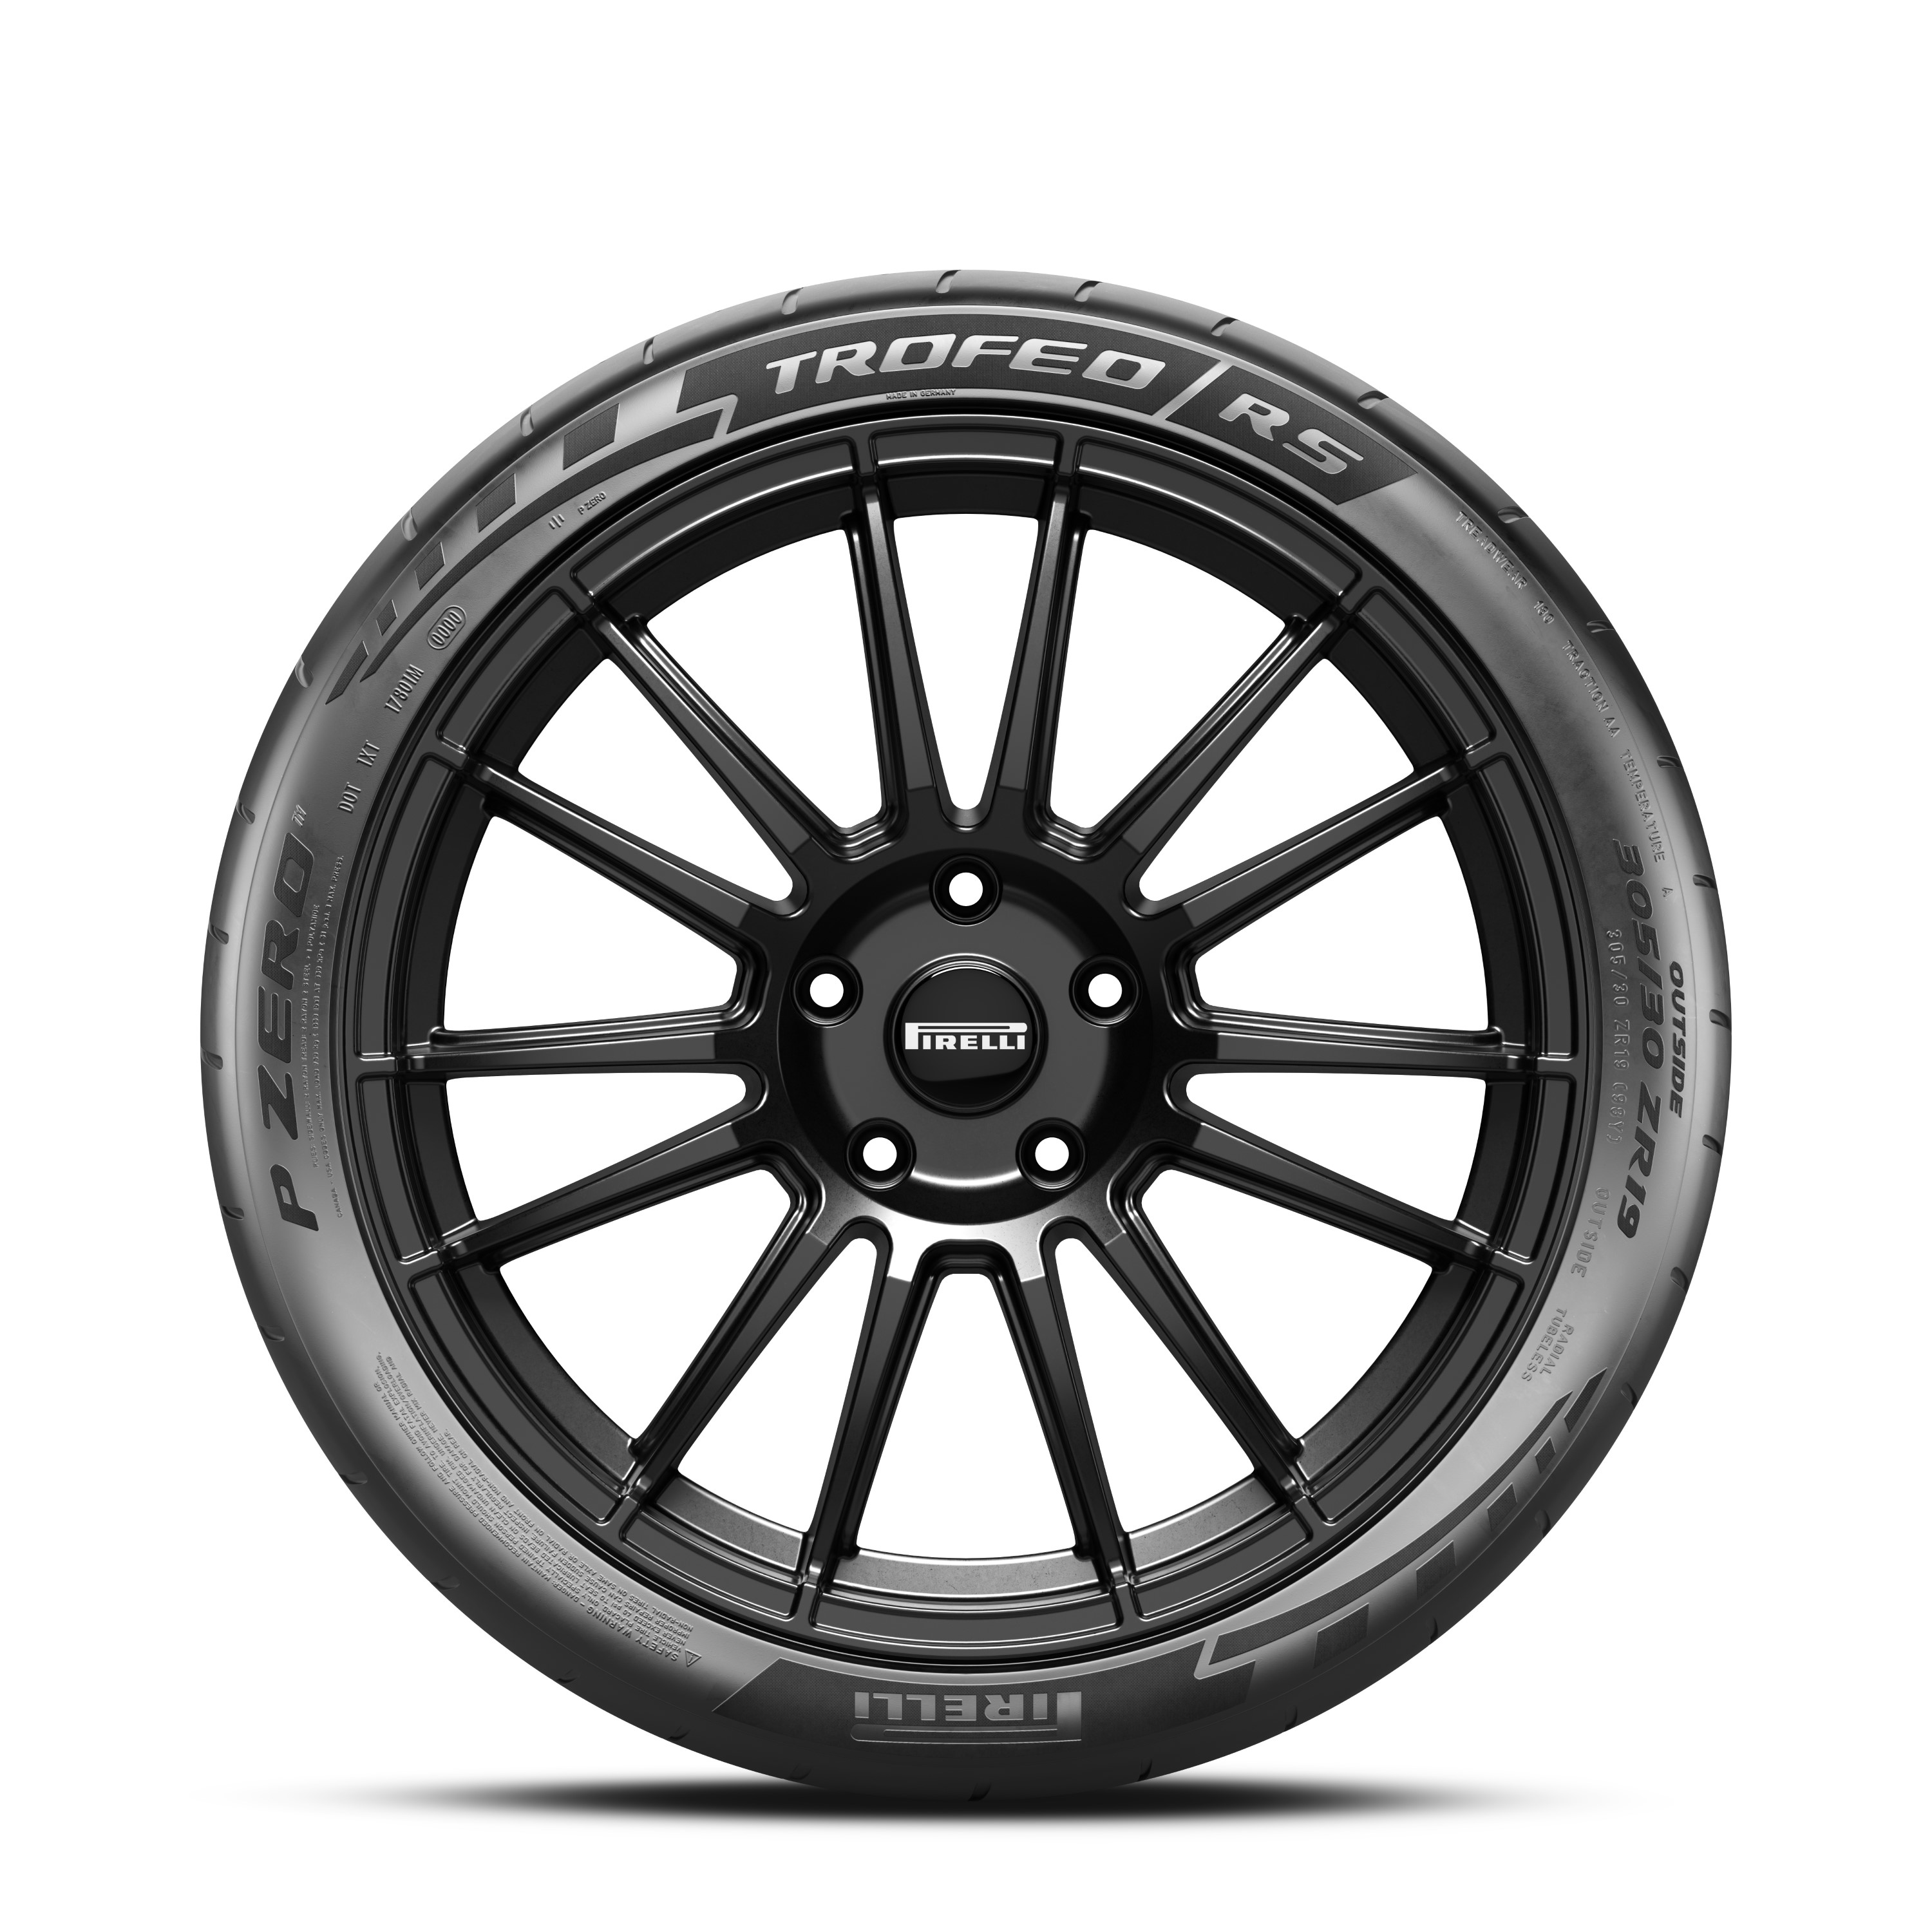 Pirelli P Zero Trofeo RS